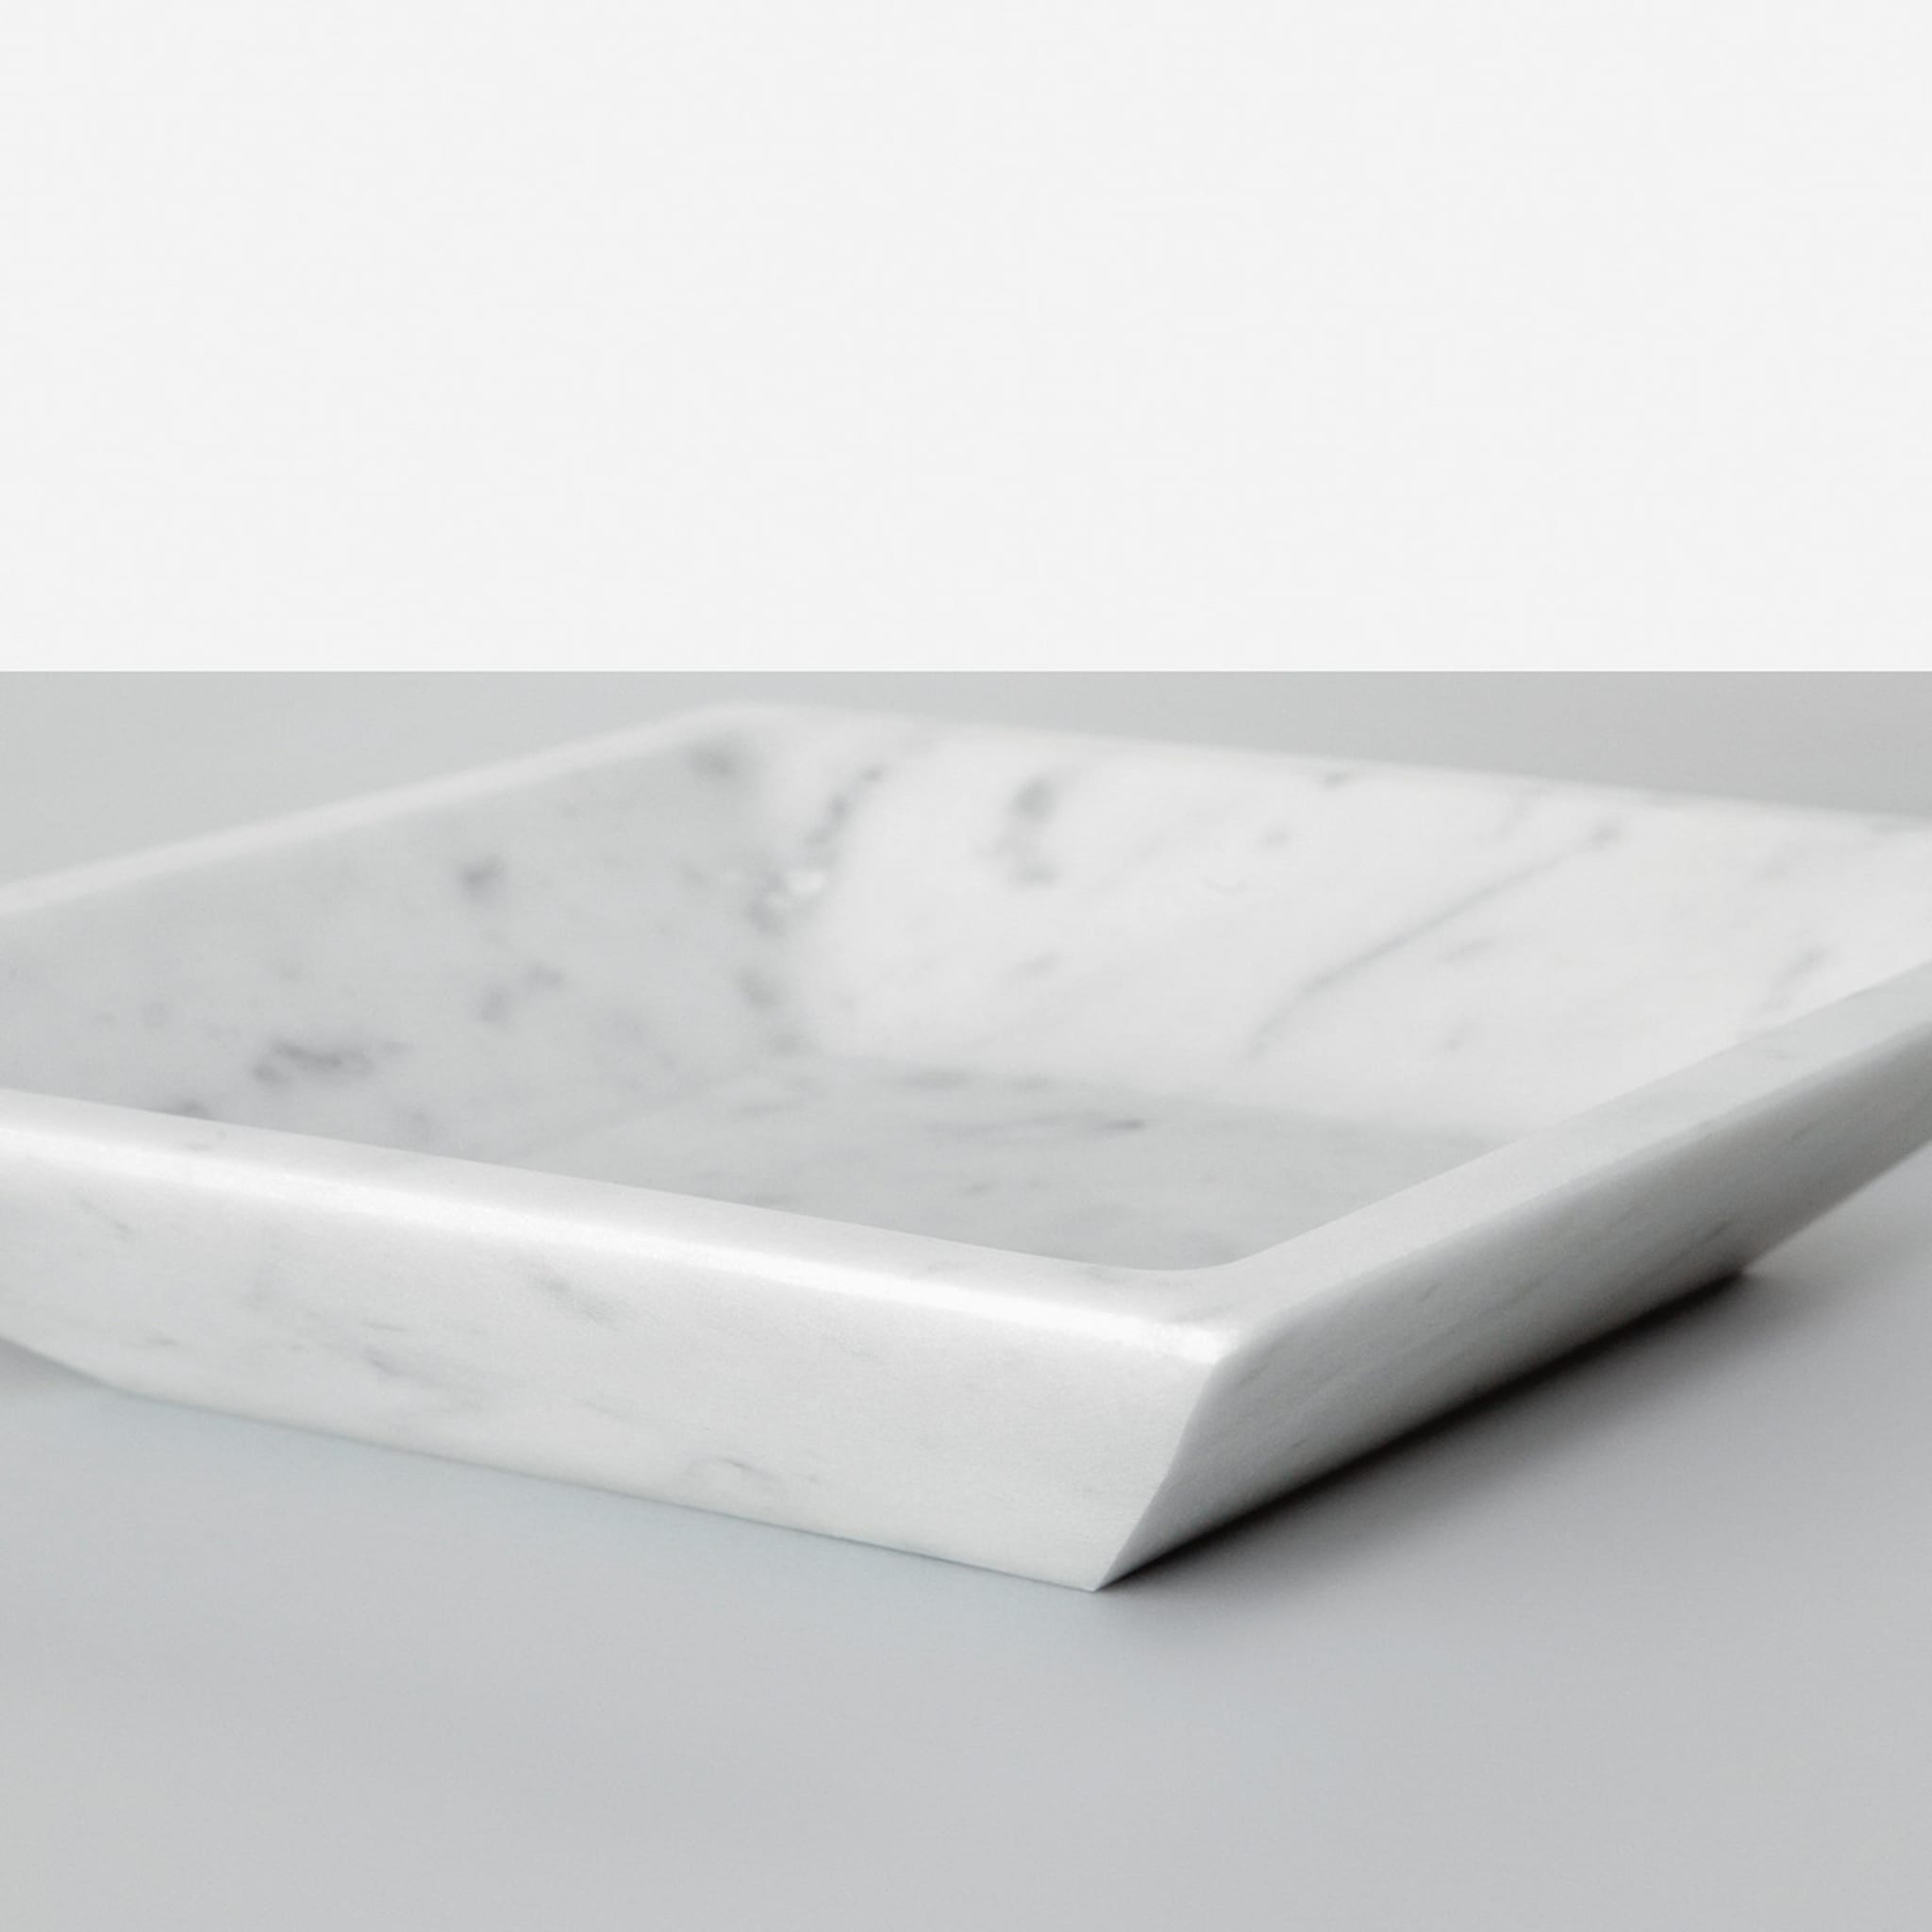 Square White Carrara Soup Plate by Studioformart - Alternative view 1